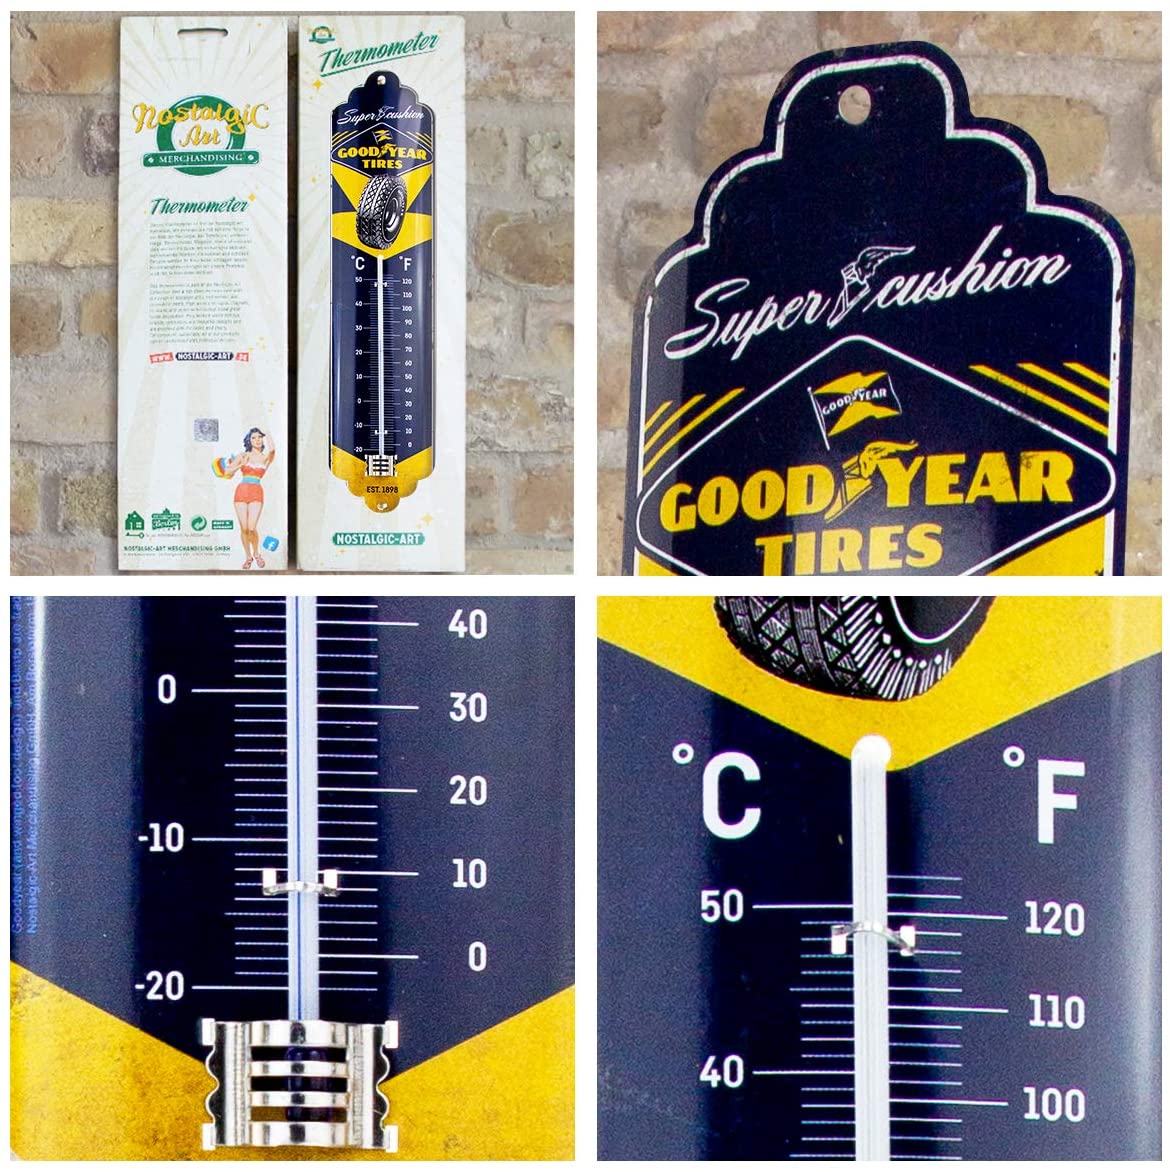 80316c-thermometre-murale-good-year-nostalgic-art-vintage-retro